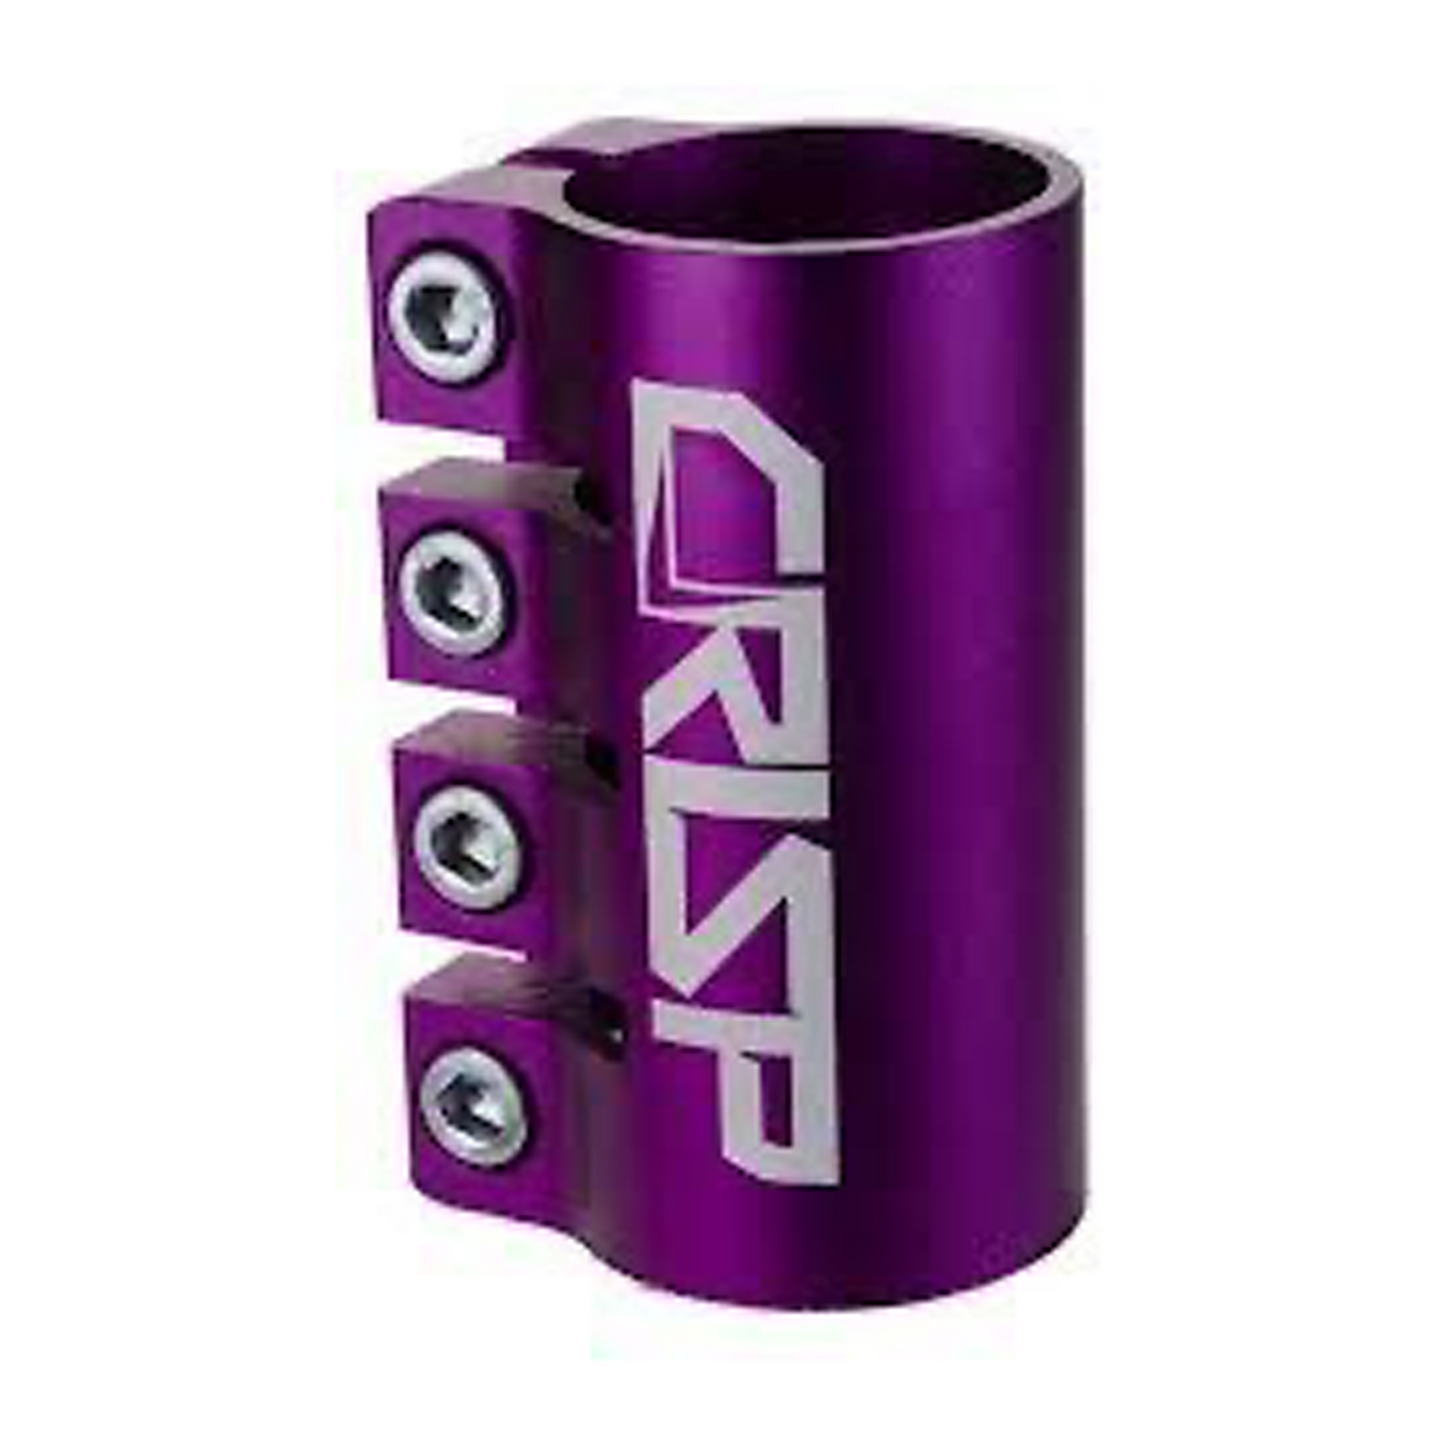 Crisp Oversized Quad Clamp - Anodized Purple